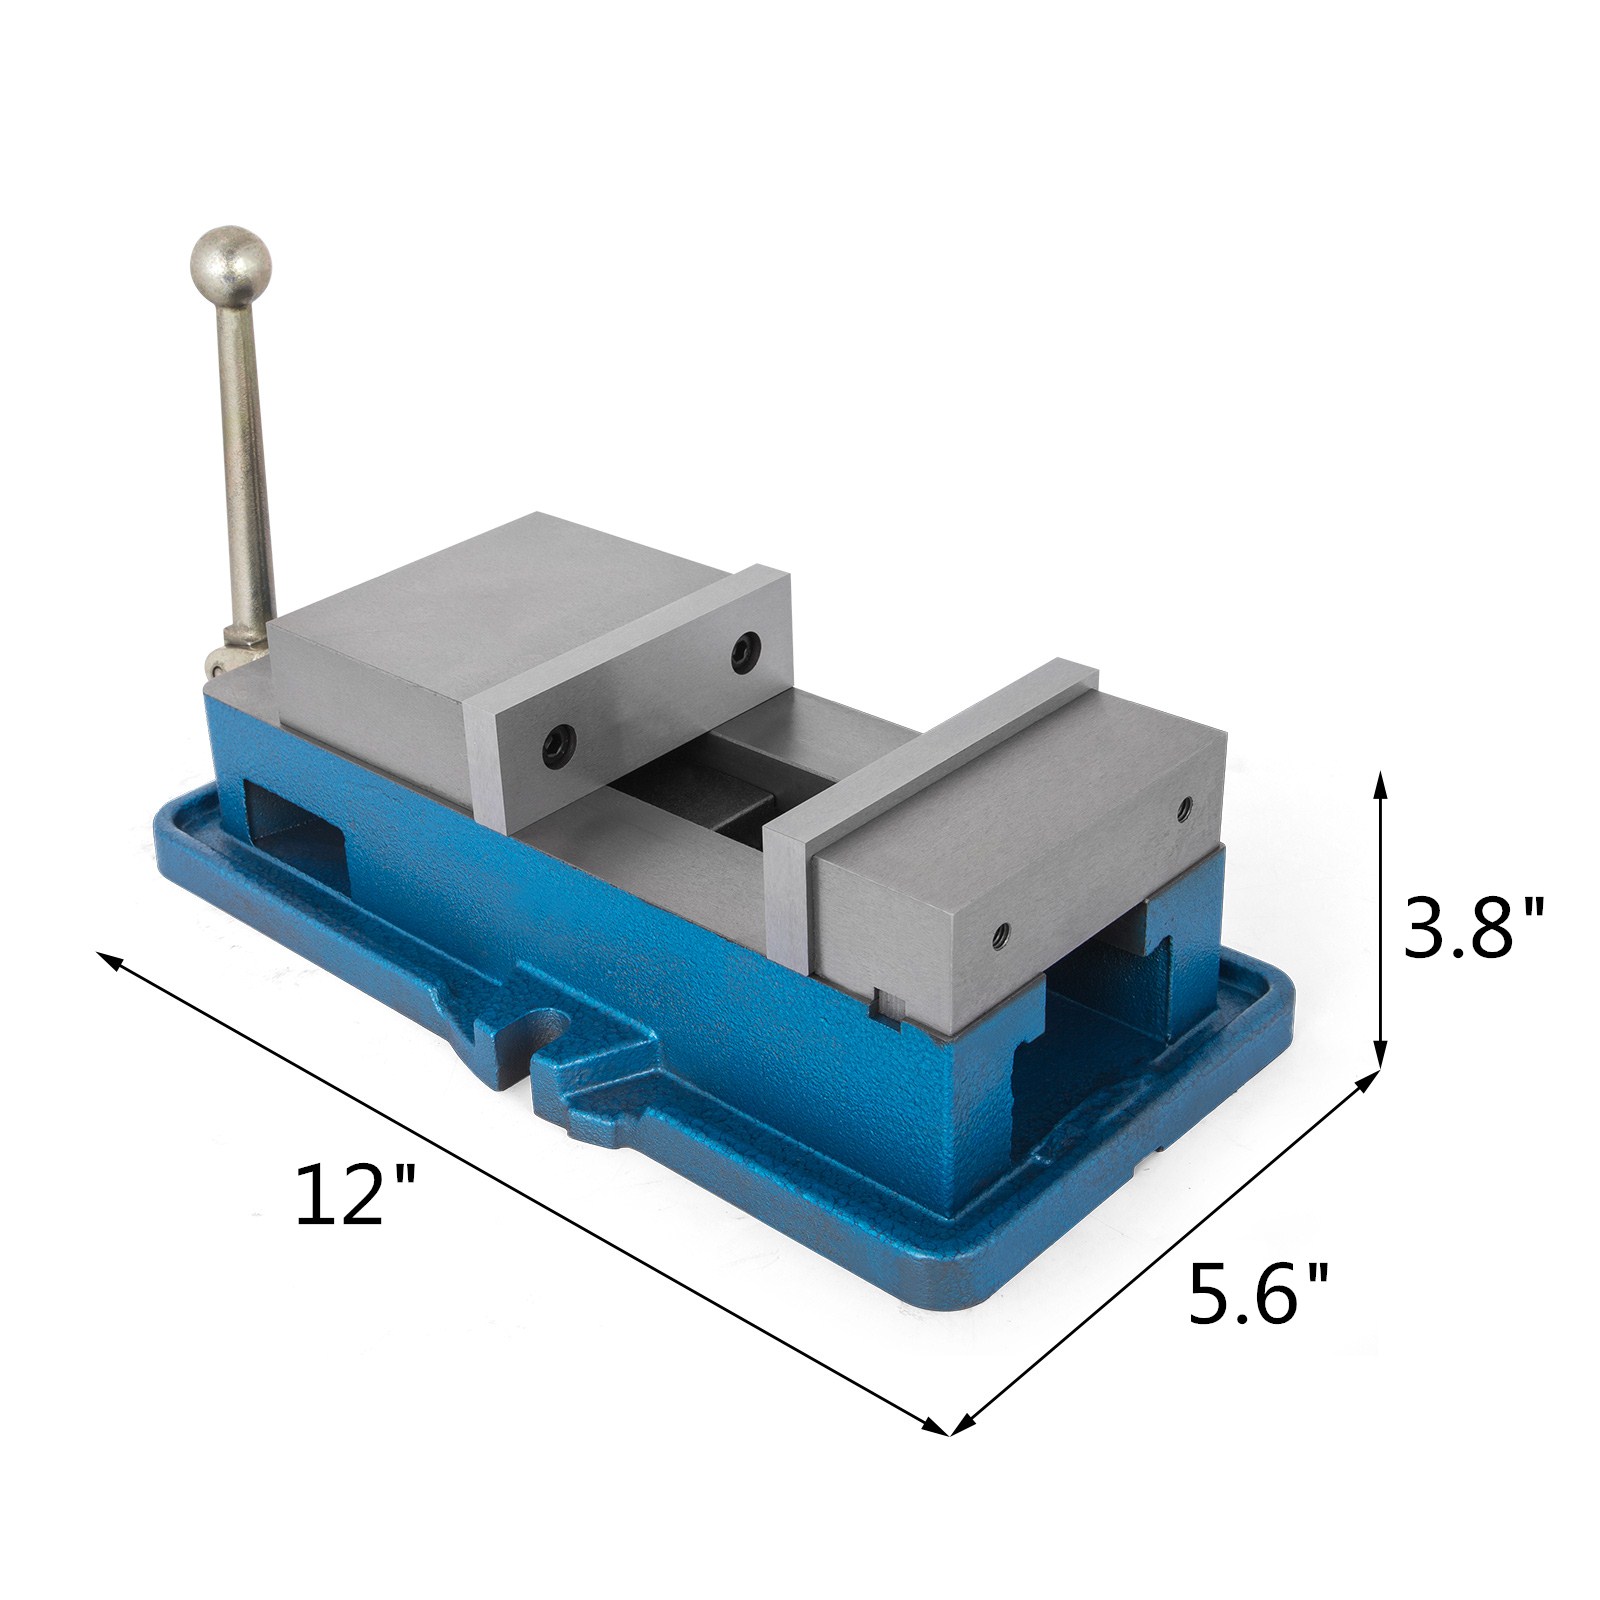 6/" Accu Lock Vise Precision Milling Drilling Machine Bench Clamp Vice POPULAR